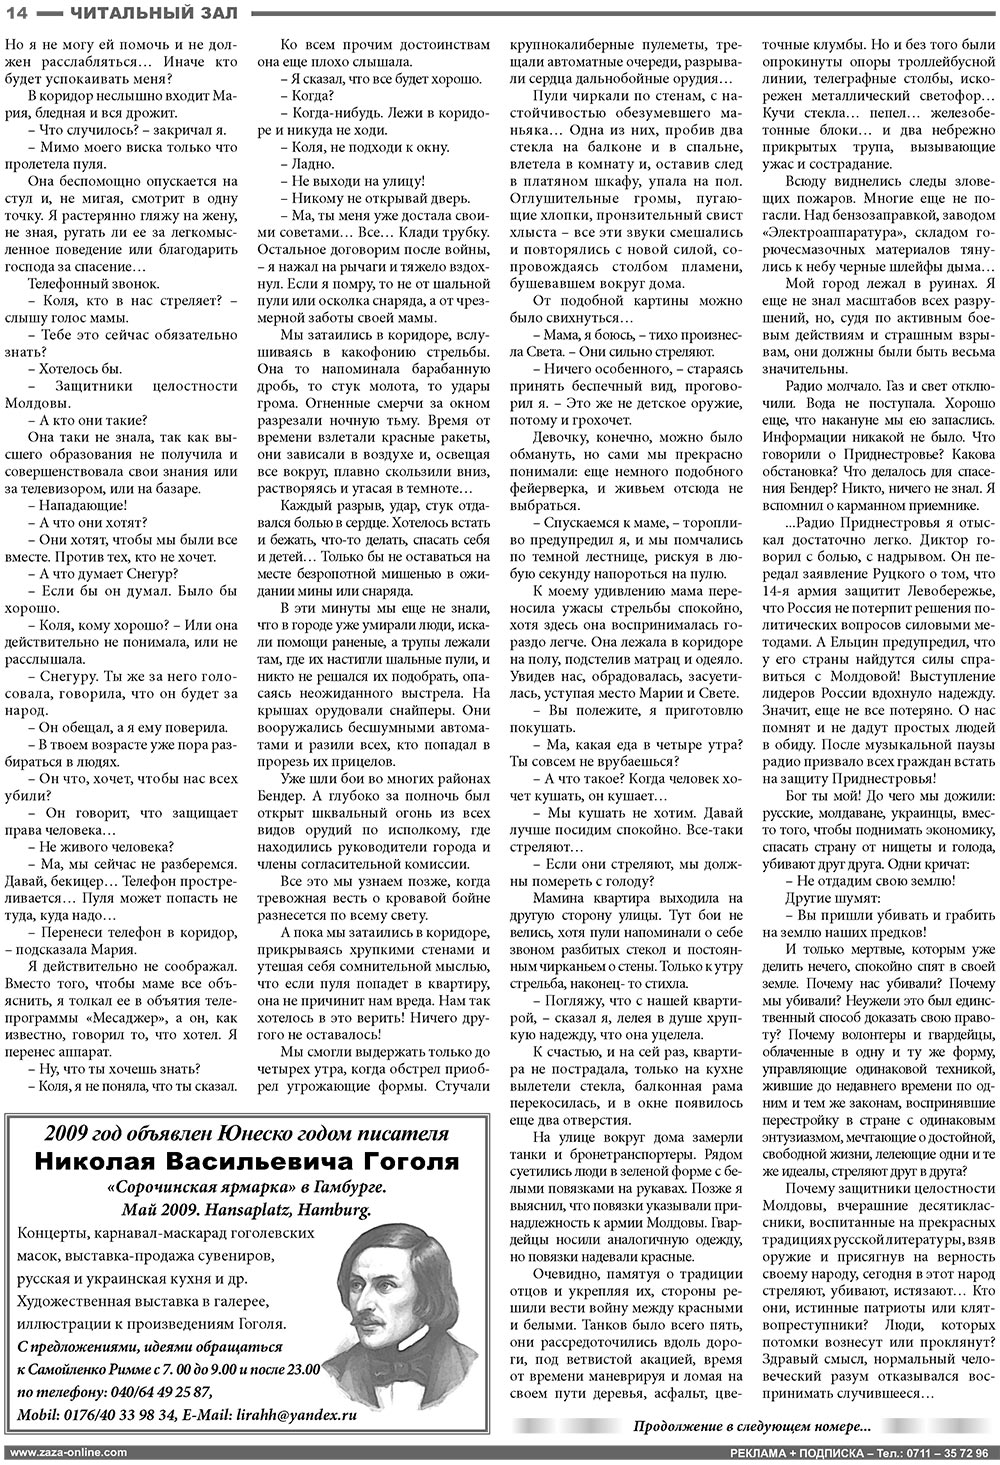 Известия BW (газета). 2008 год, номер 11, стр. 14